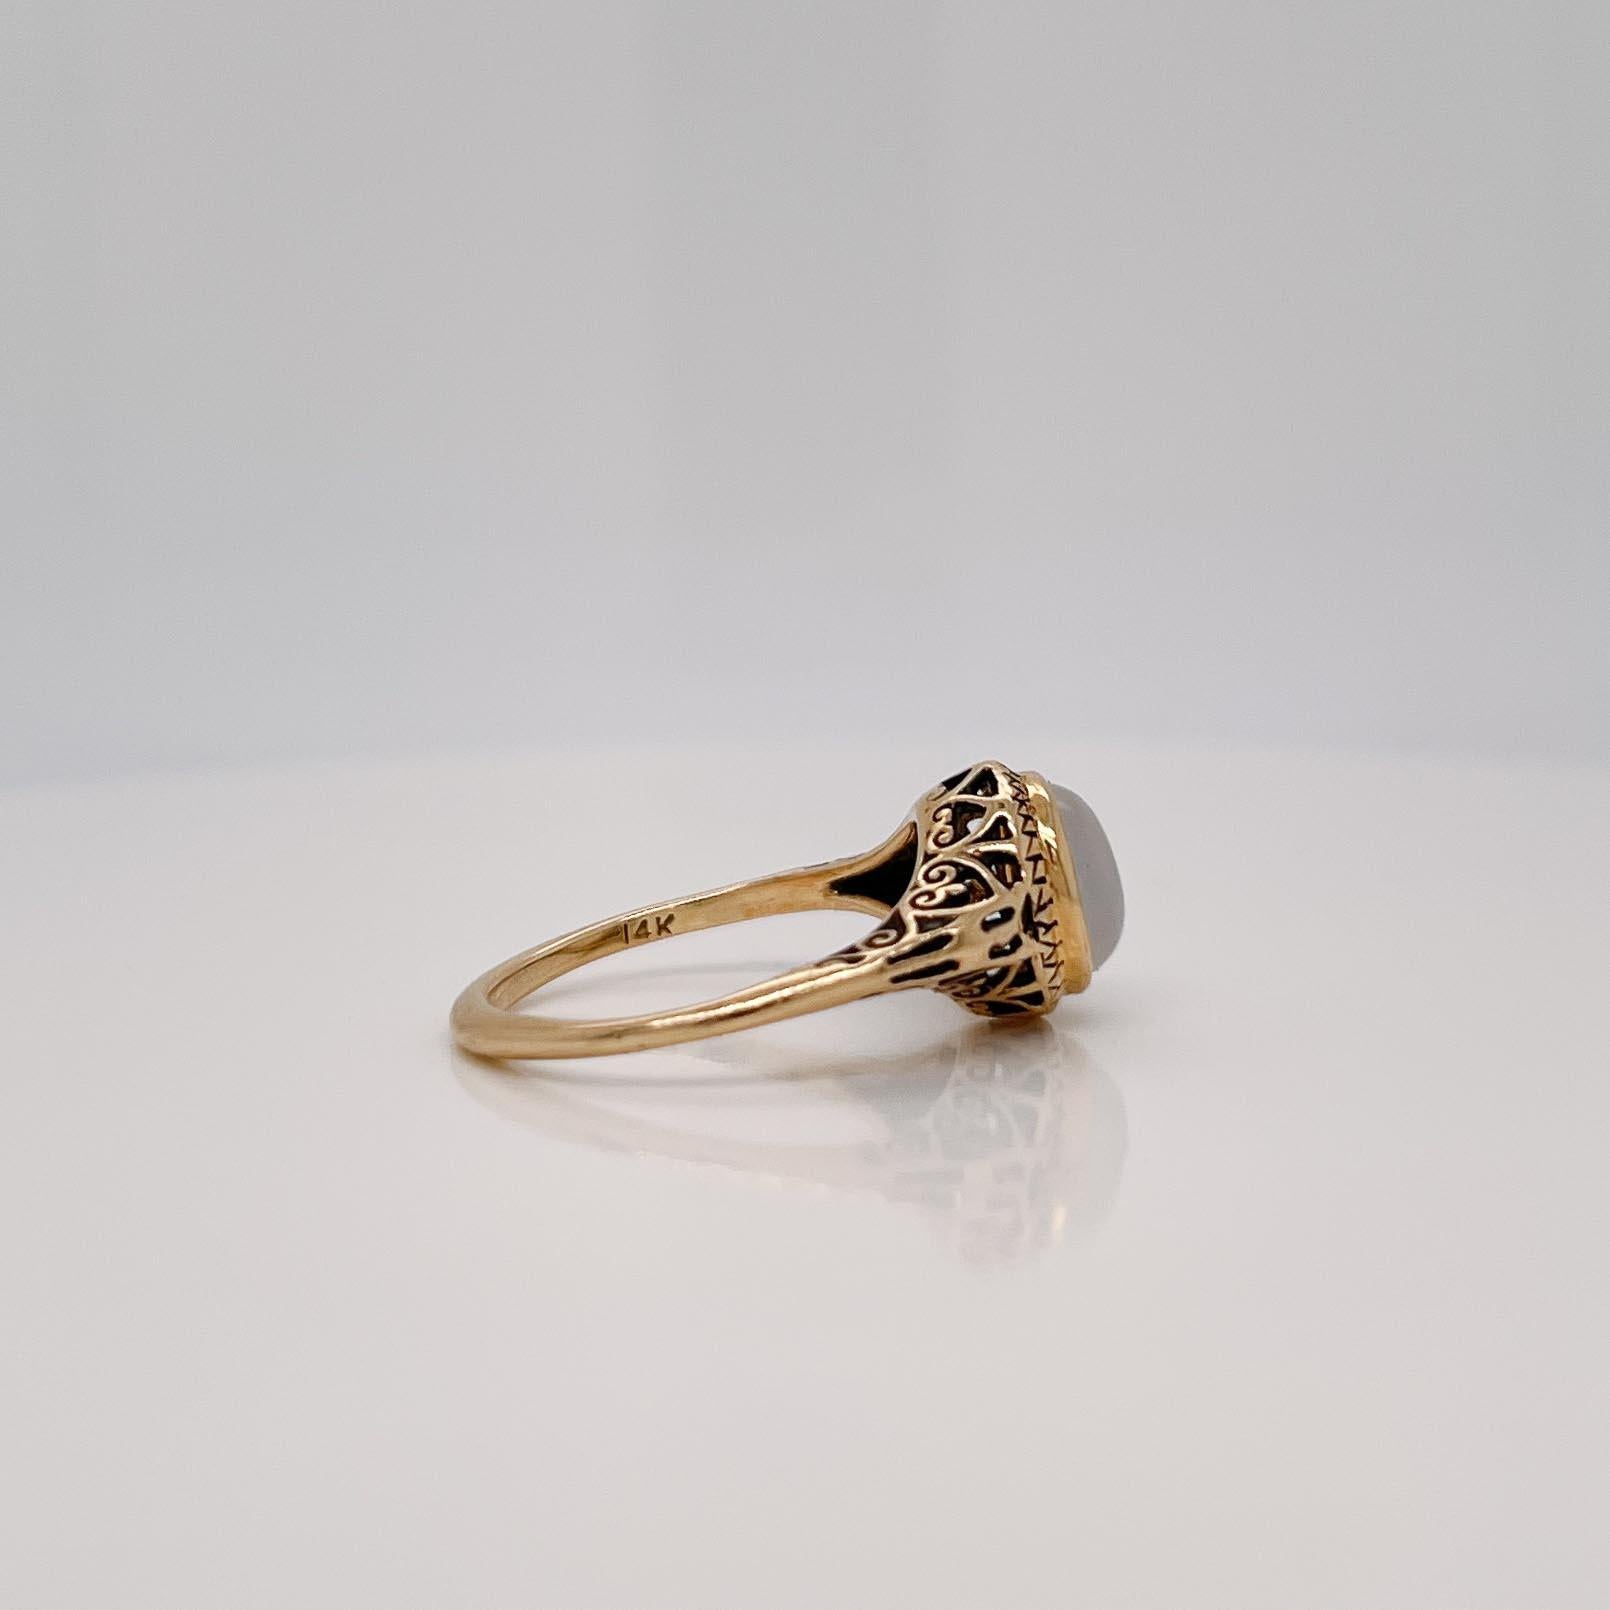 Antique Signed Edwardian Moonstone Cabochon & 14K Gold Filigree Signet Type Ring For Sale 1